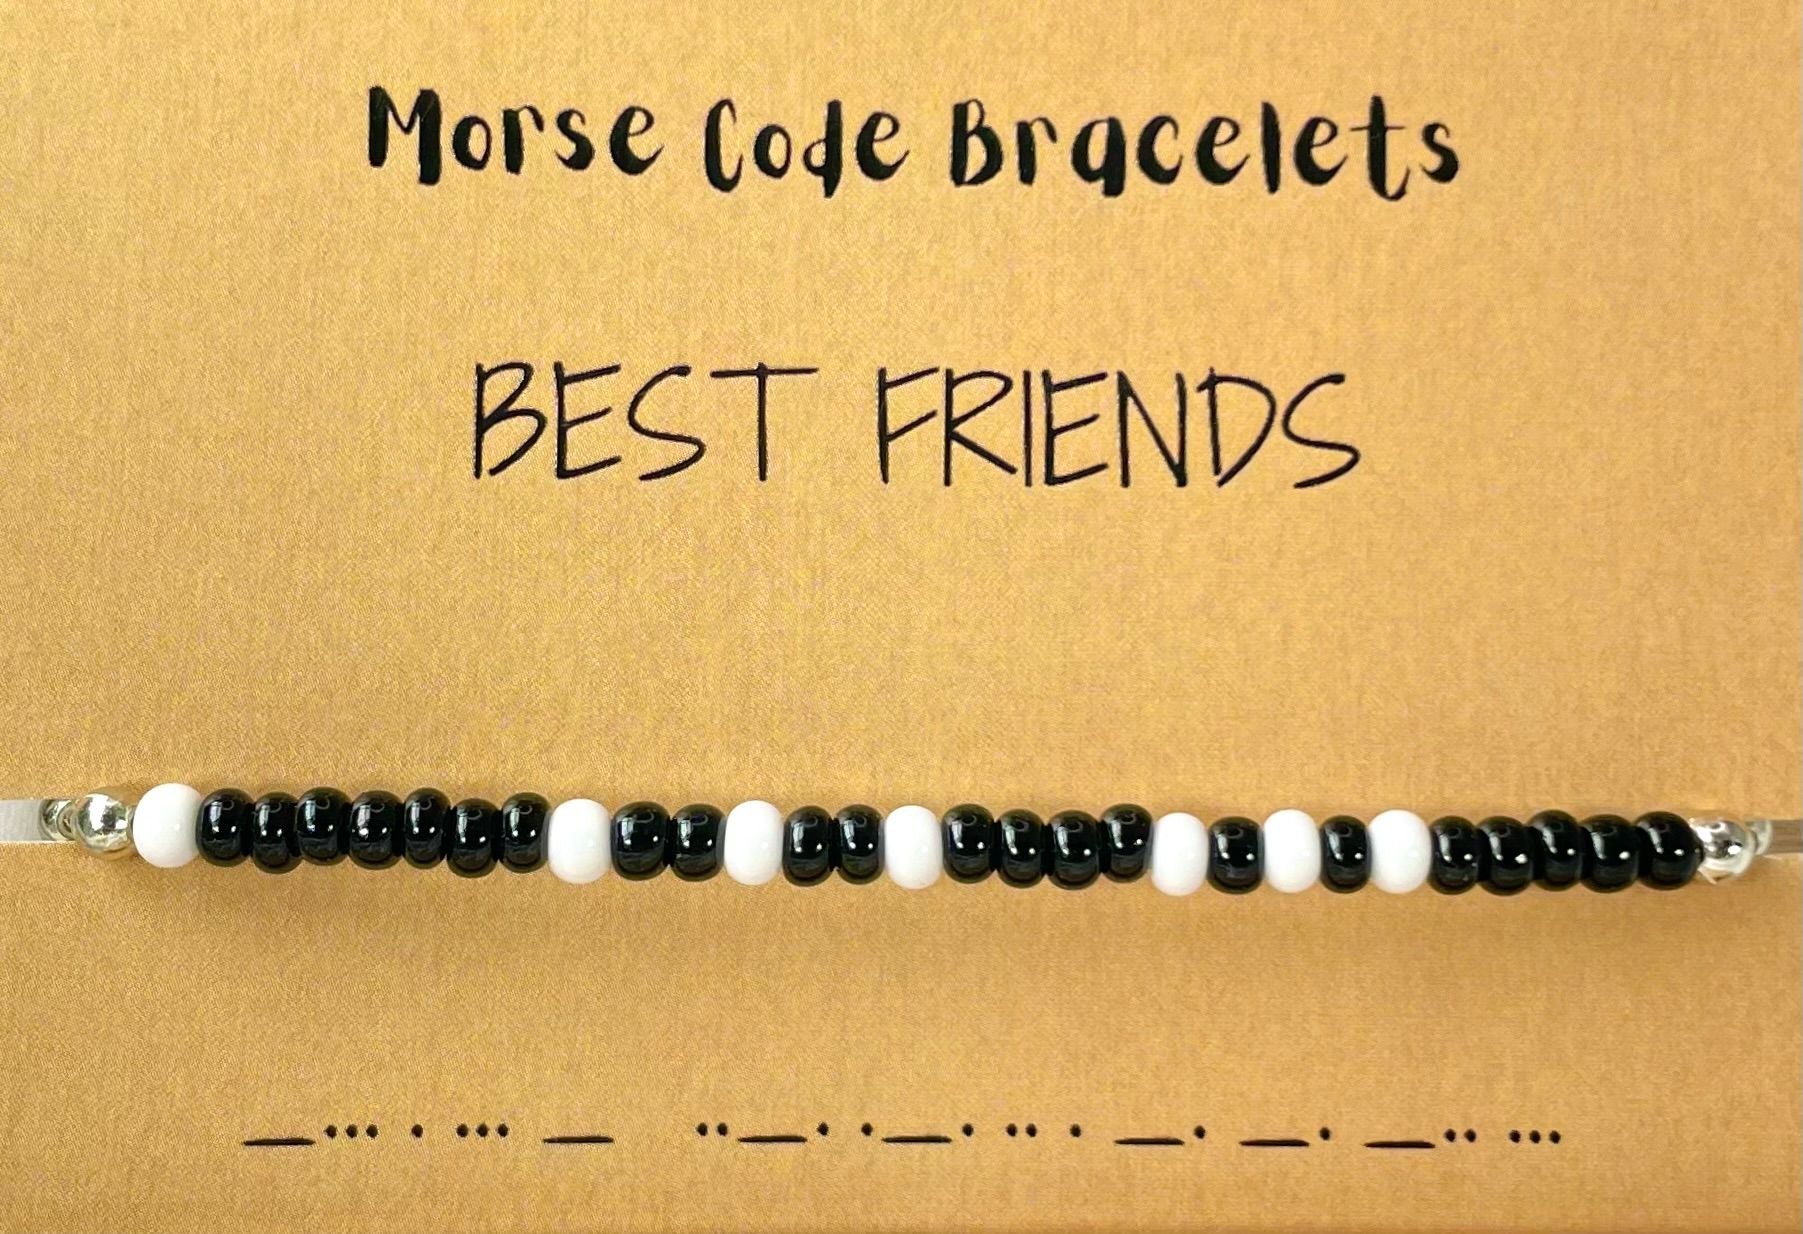 Personalize Your Morse Code Bracelet